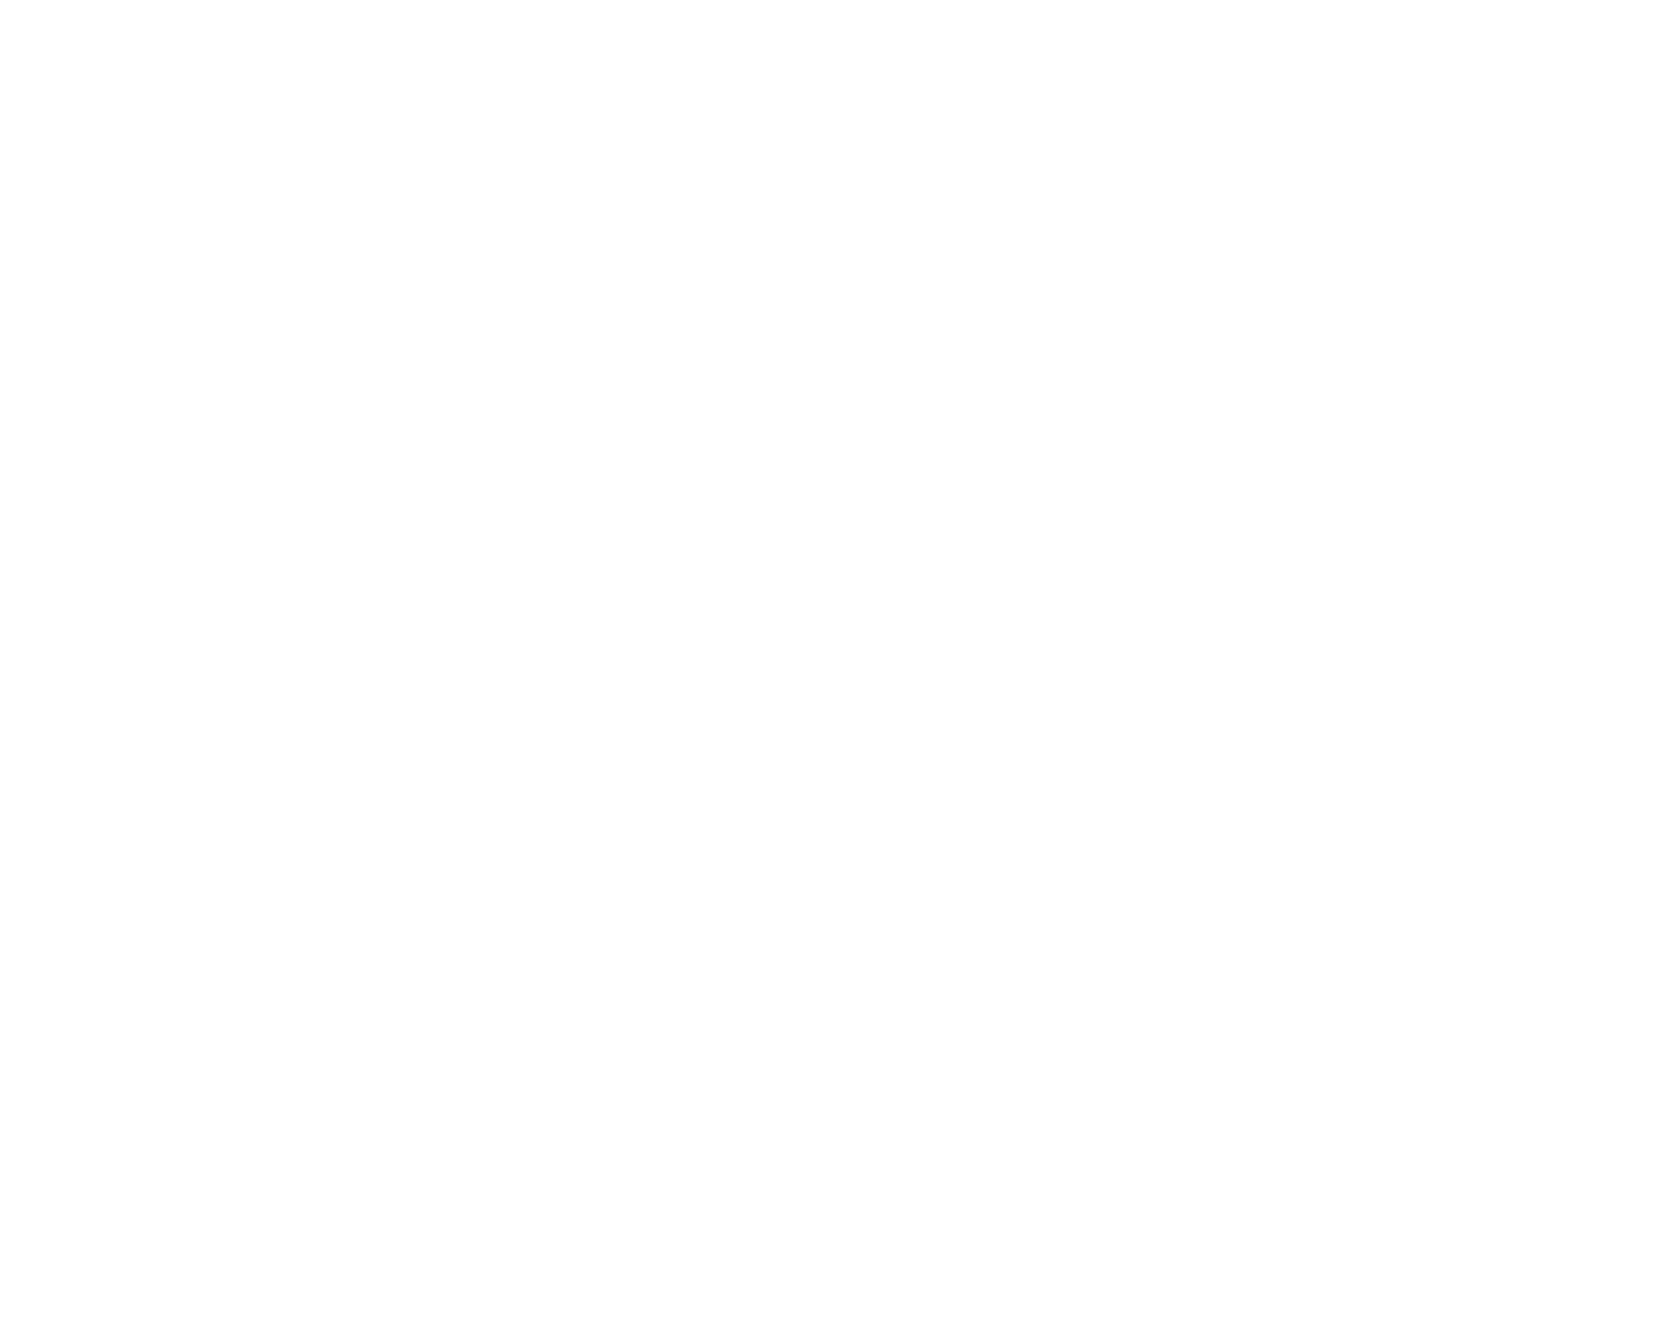 DriveWorks